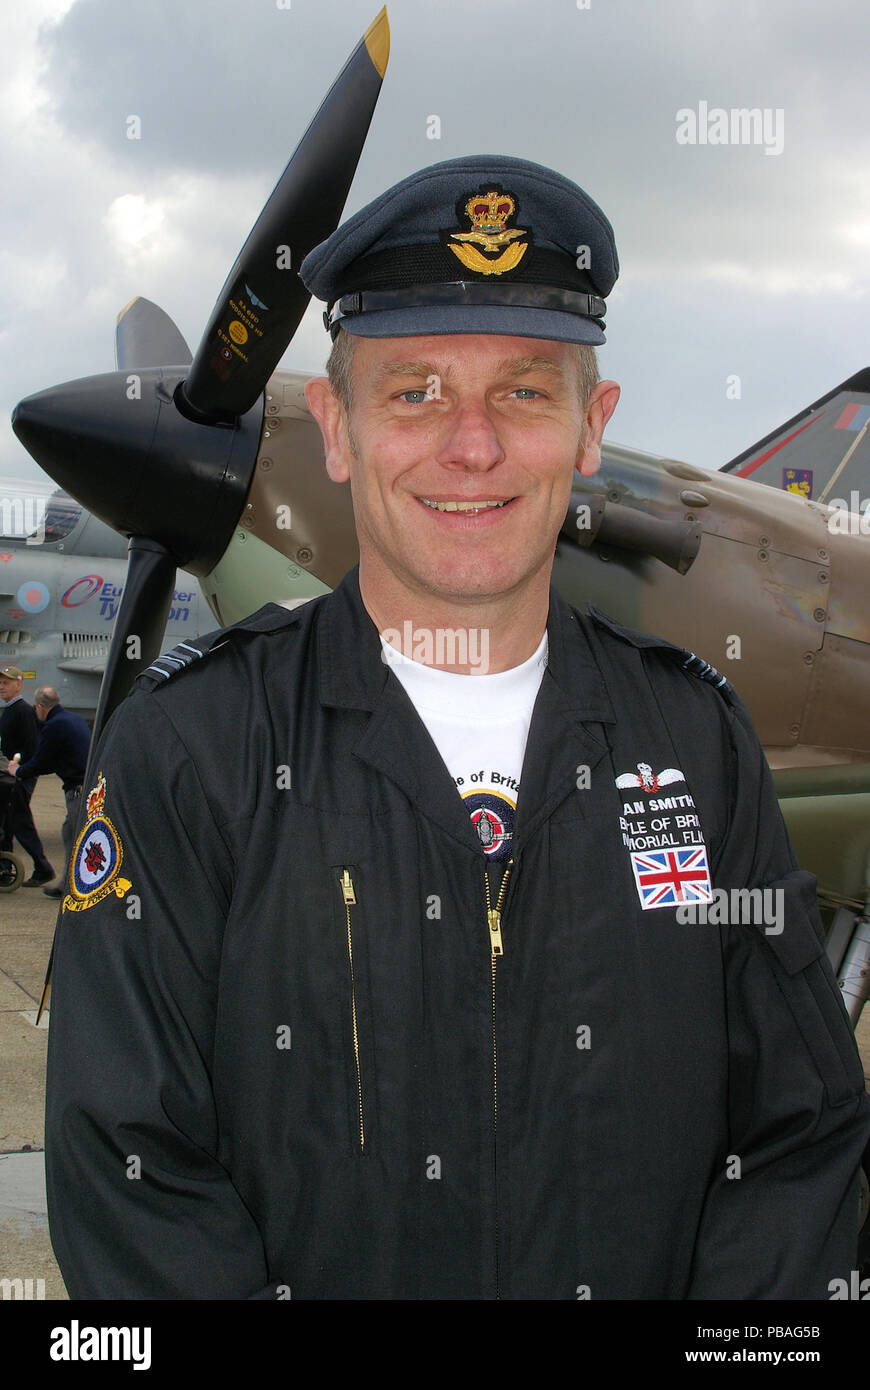 Offizier kommandieren Royal Air Force RAF Battle of Britain Memorial Flight Pilot Sqn LDR Ian Smith in Uniform Stockfoto